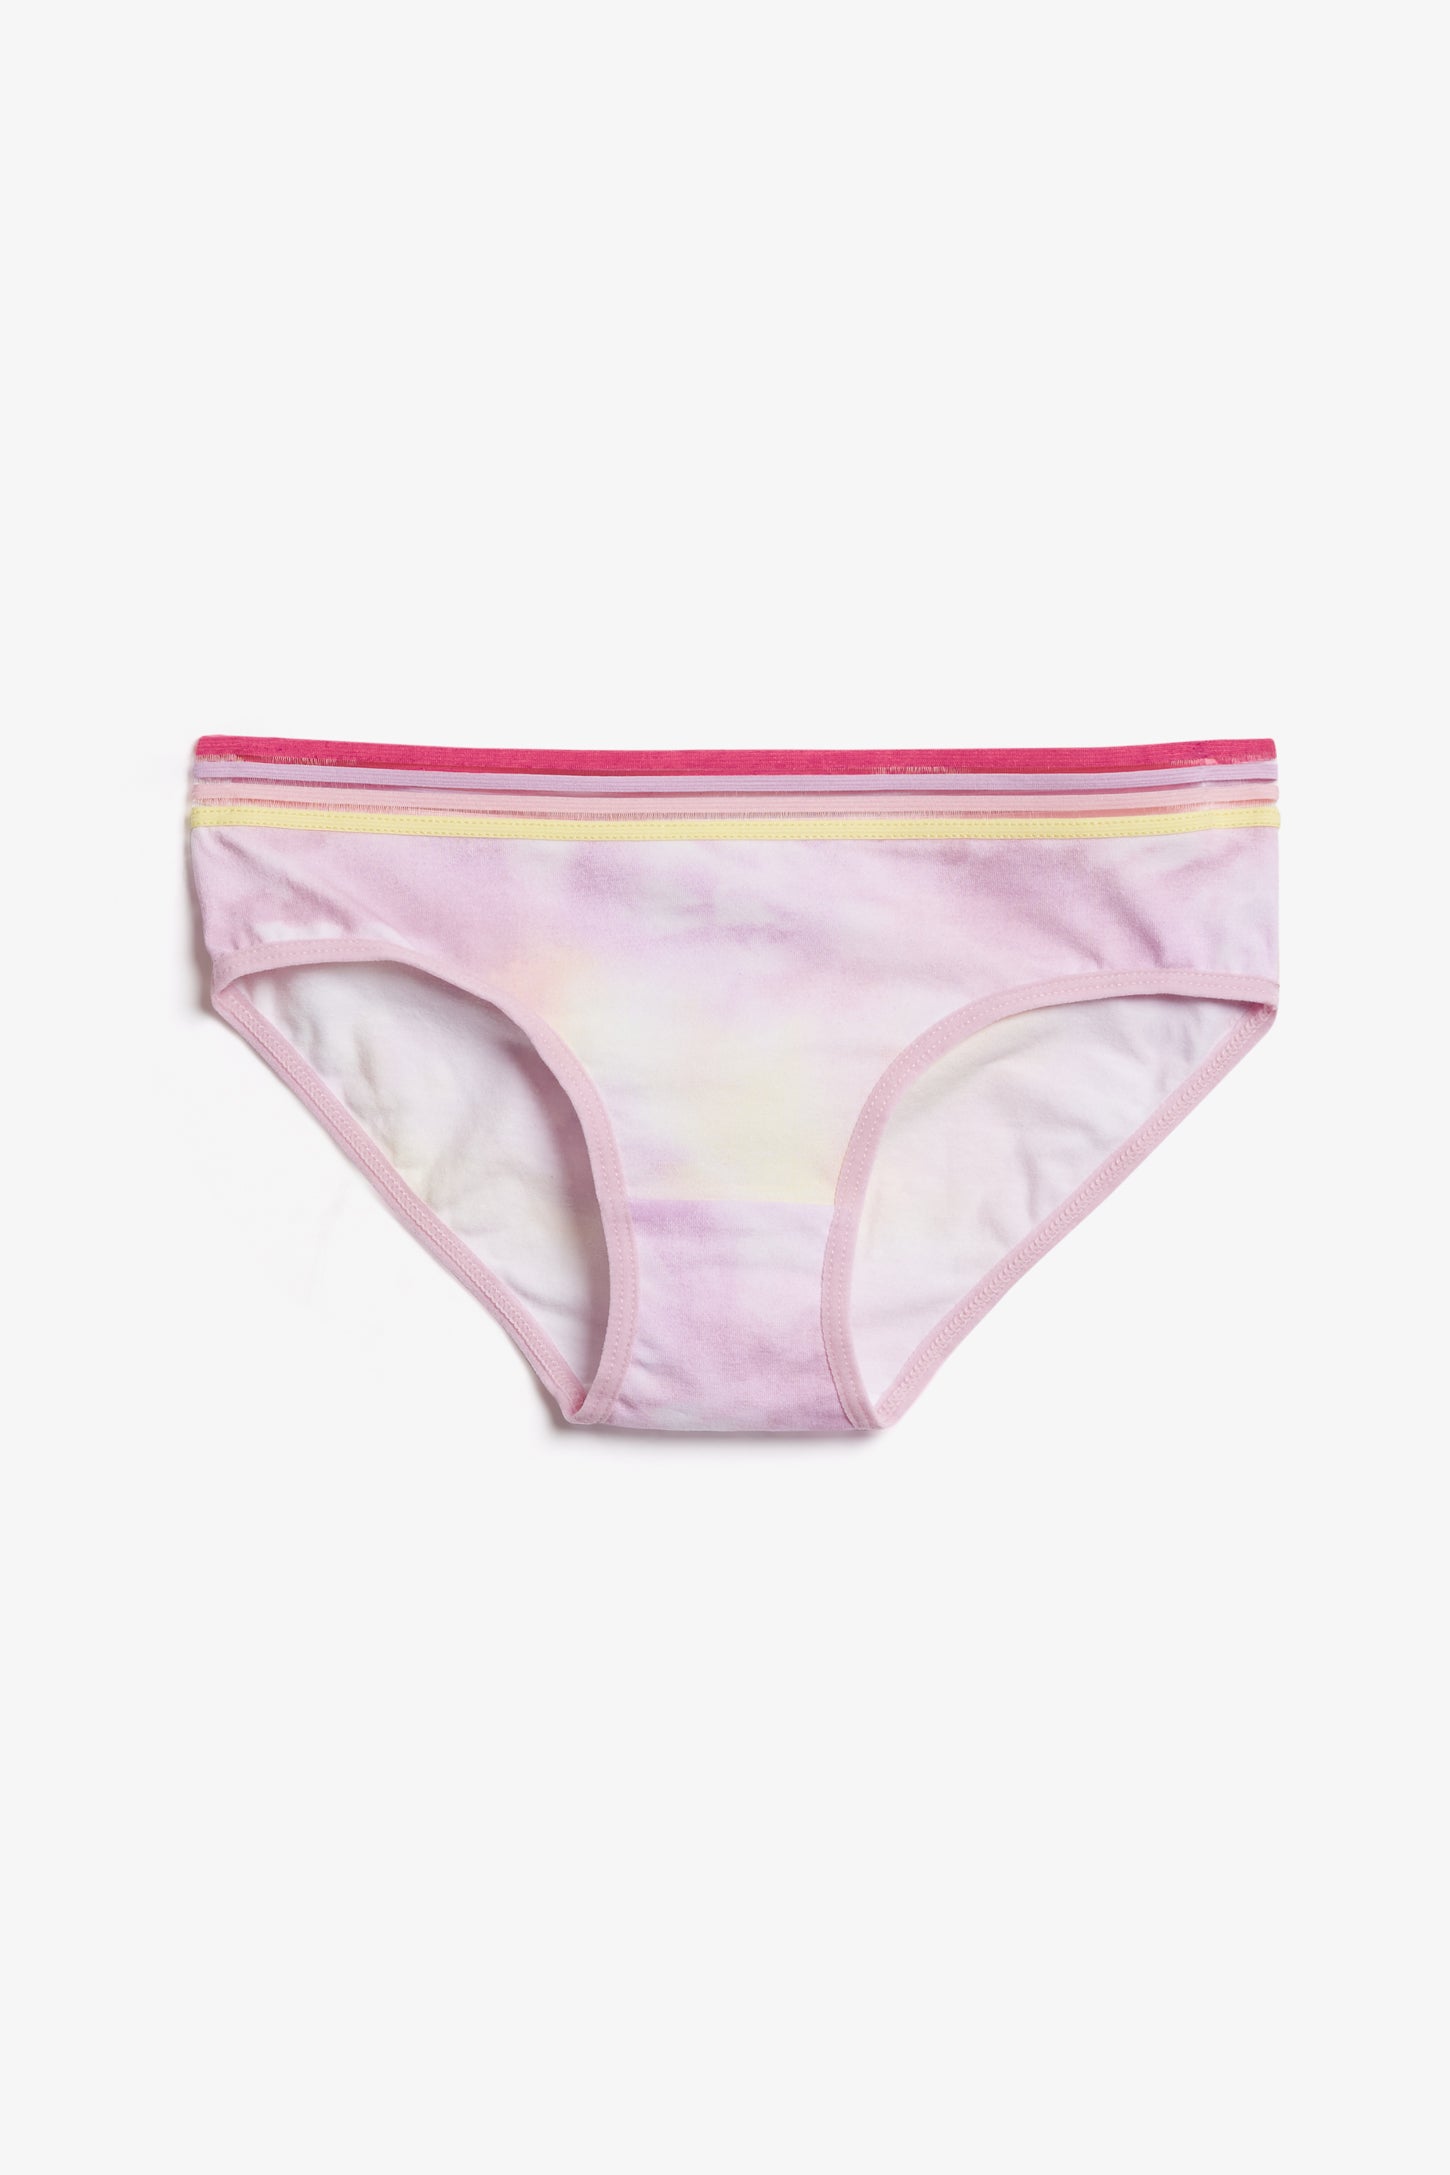 Culotte bikini arc-en-ciel, 3/15$ - Ado fille && BLANC/ROSE